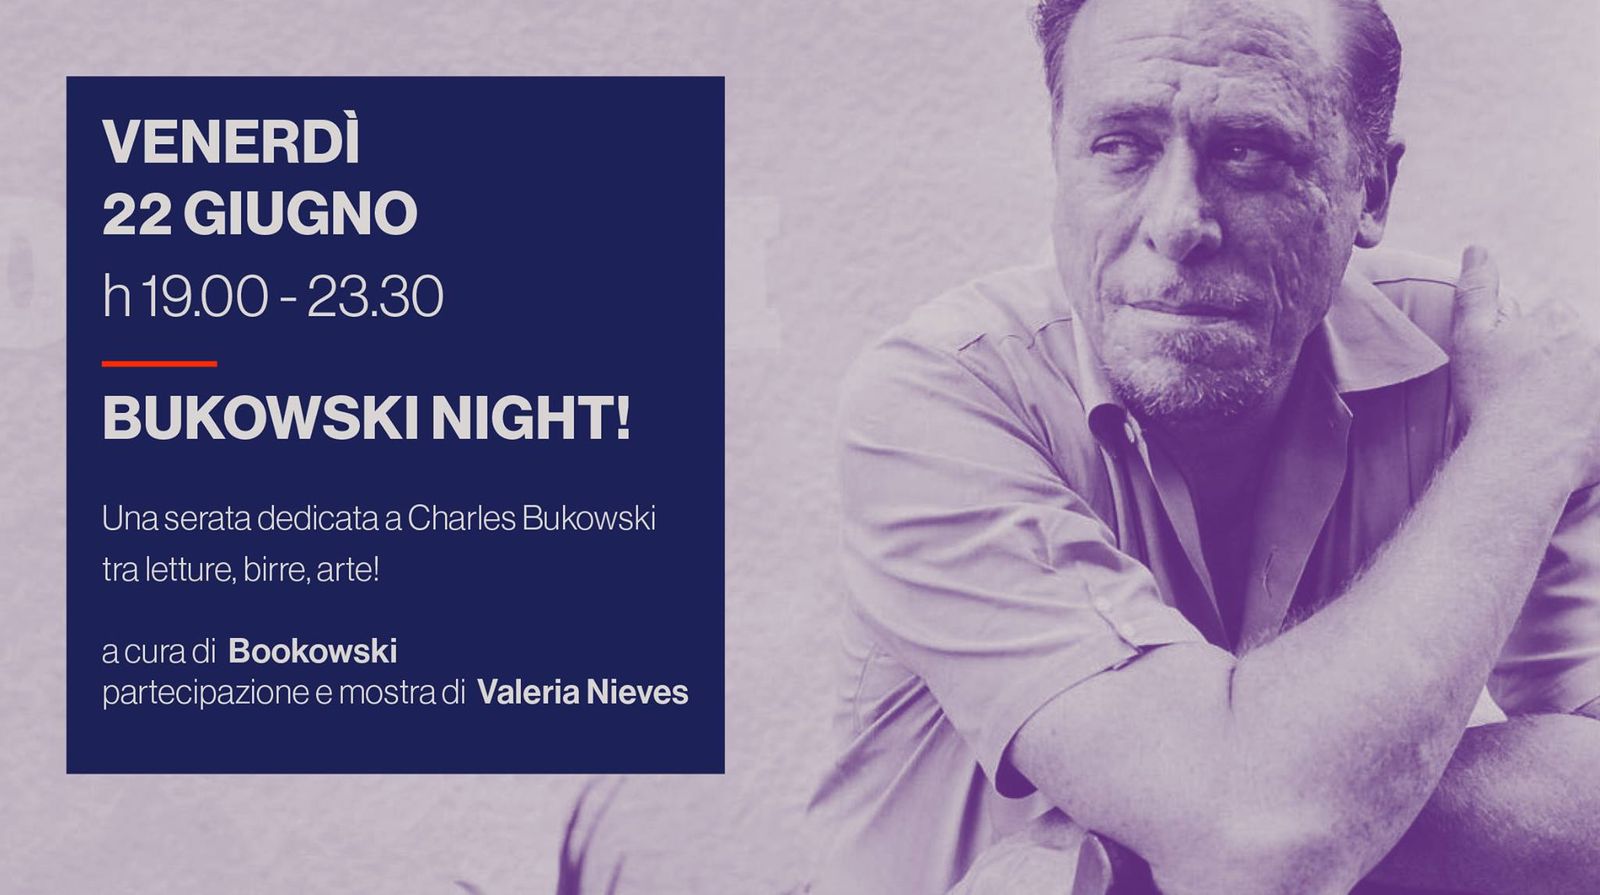 Bukowski night!